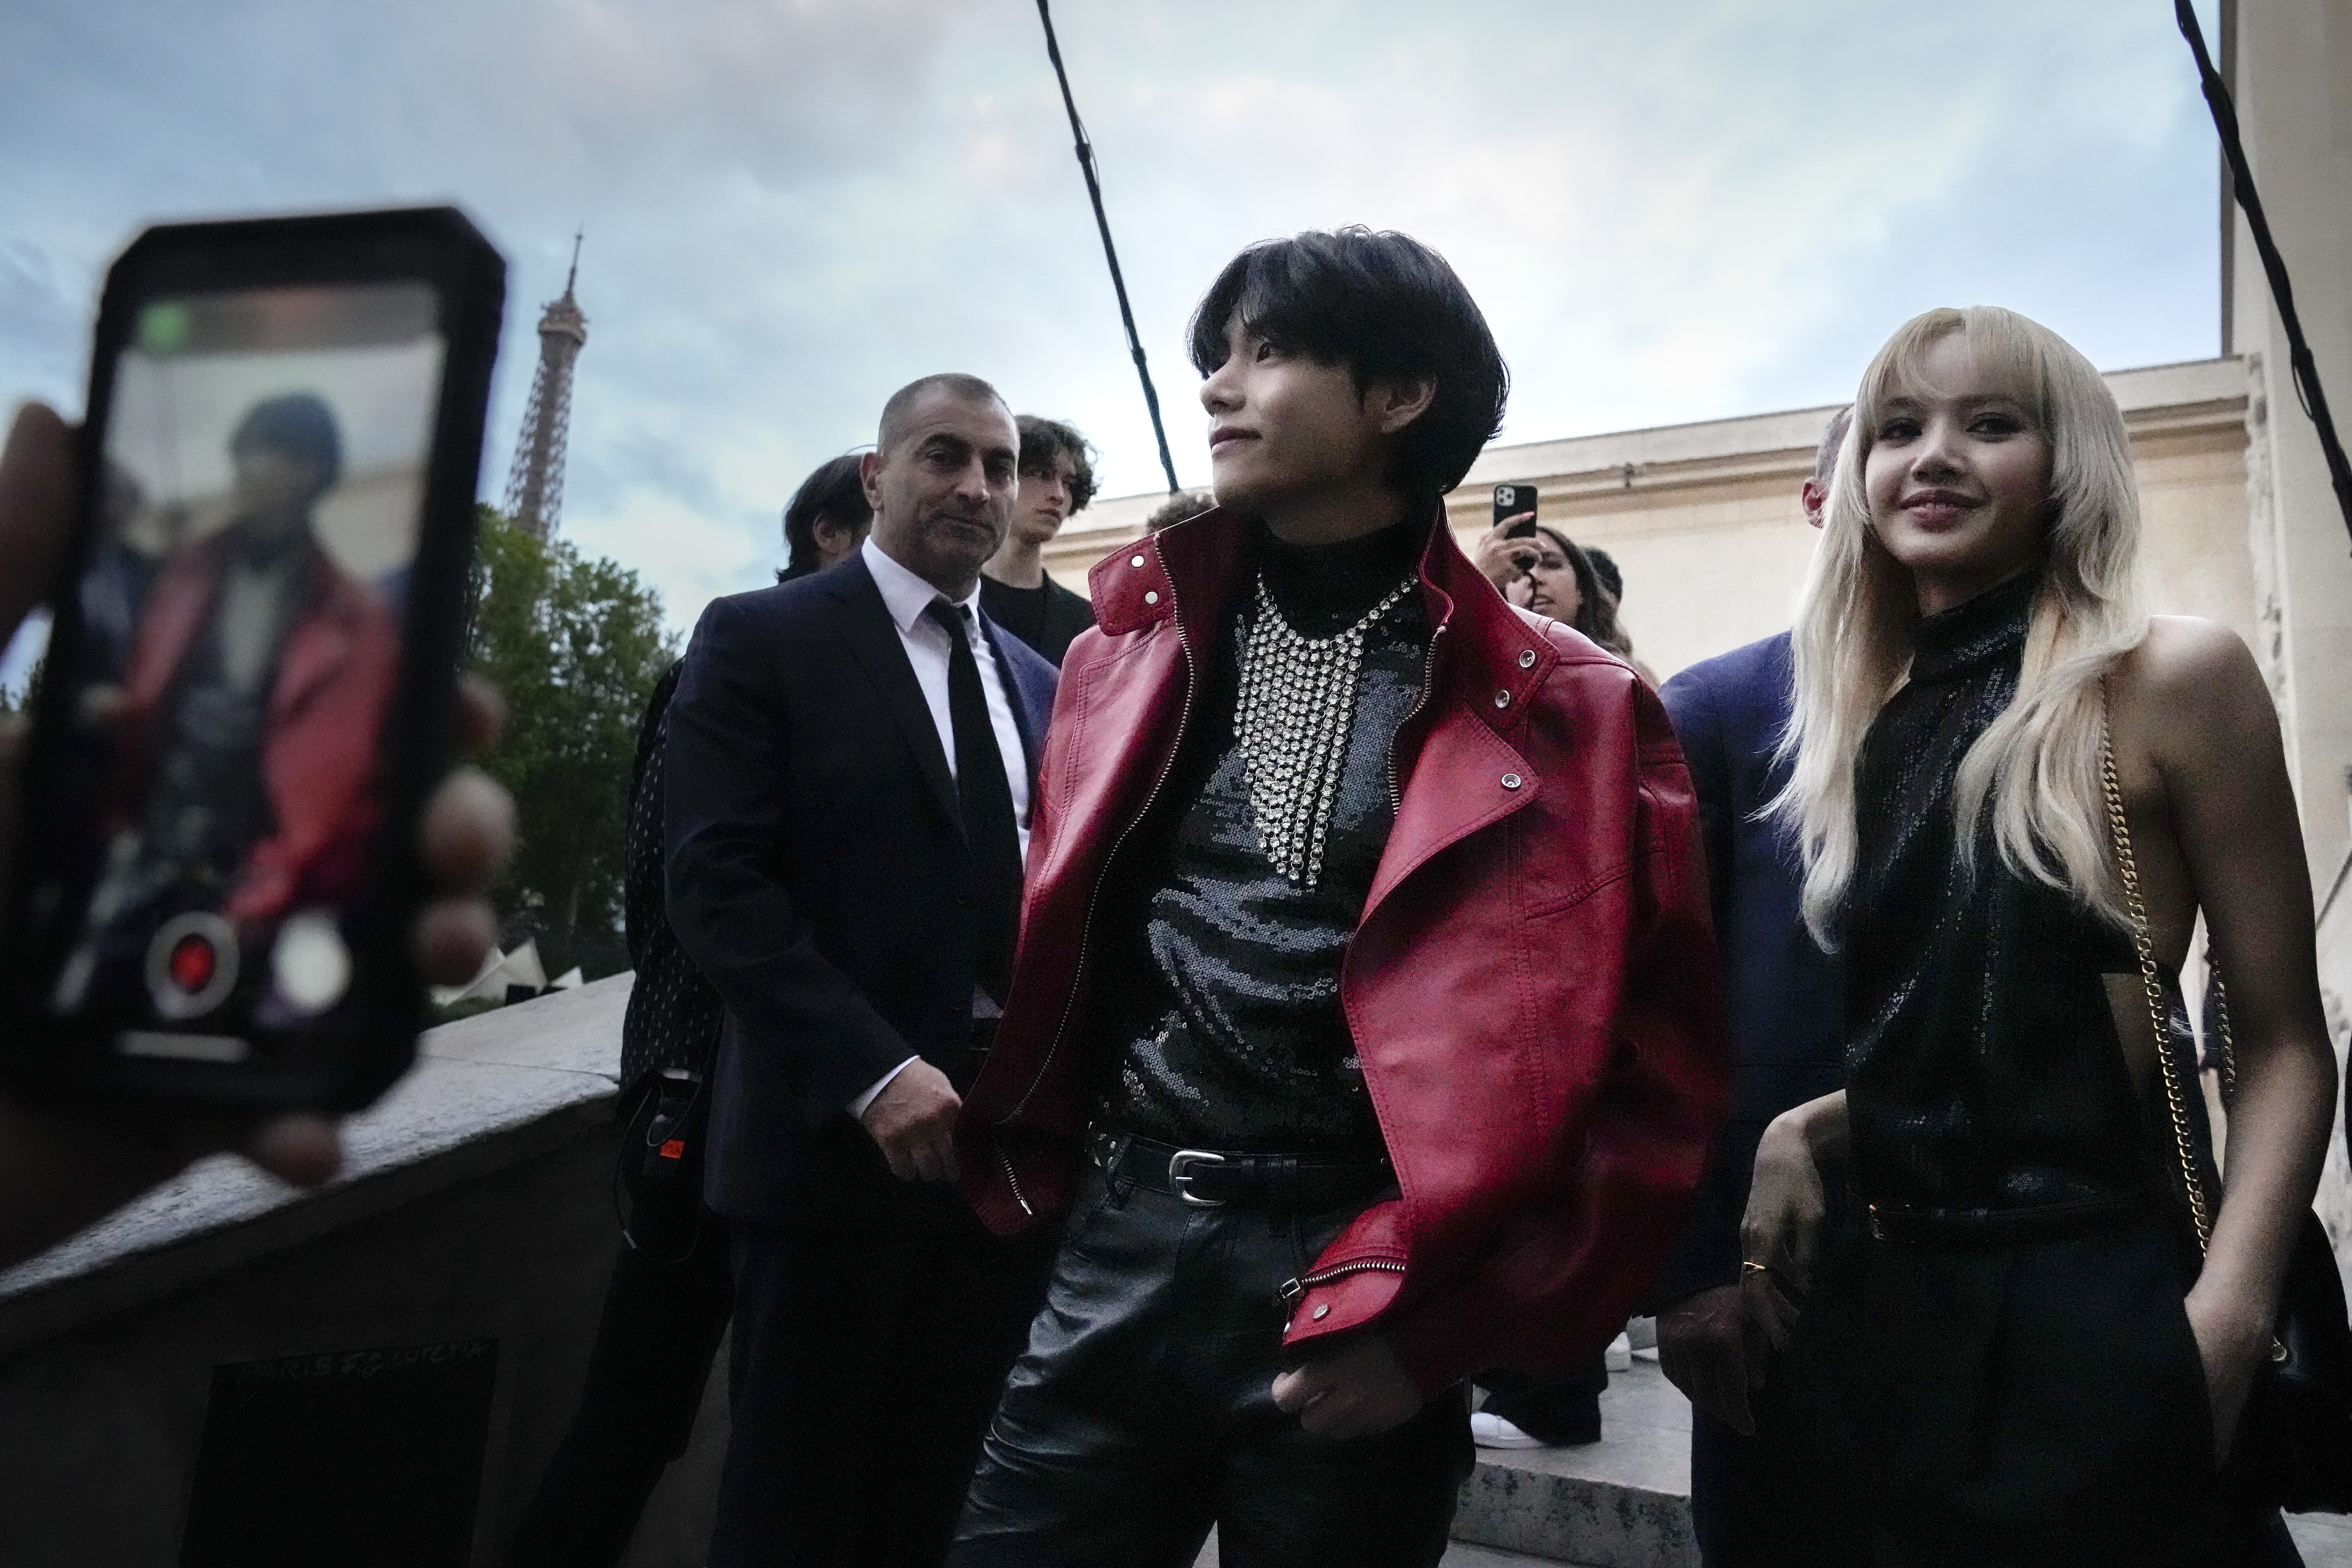 park bo-gum: Paris Fashion Week: V of BTS, Blackpink's Lisa